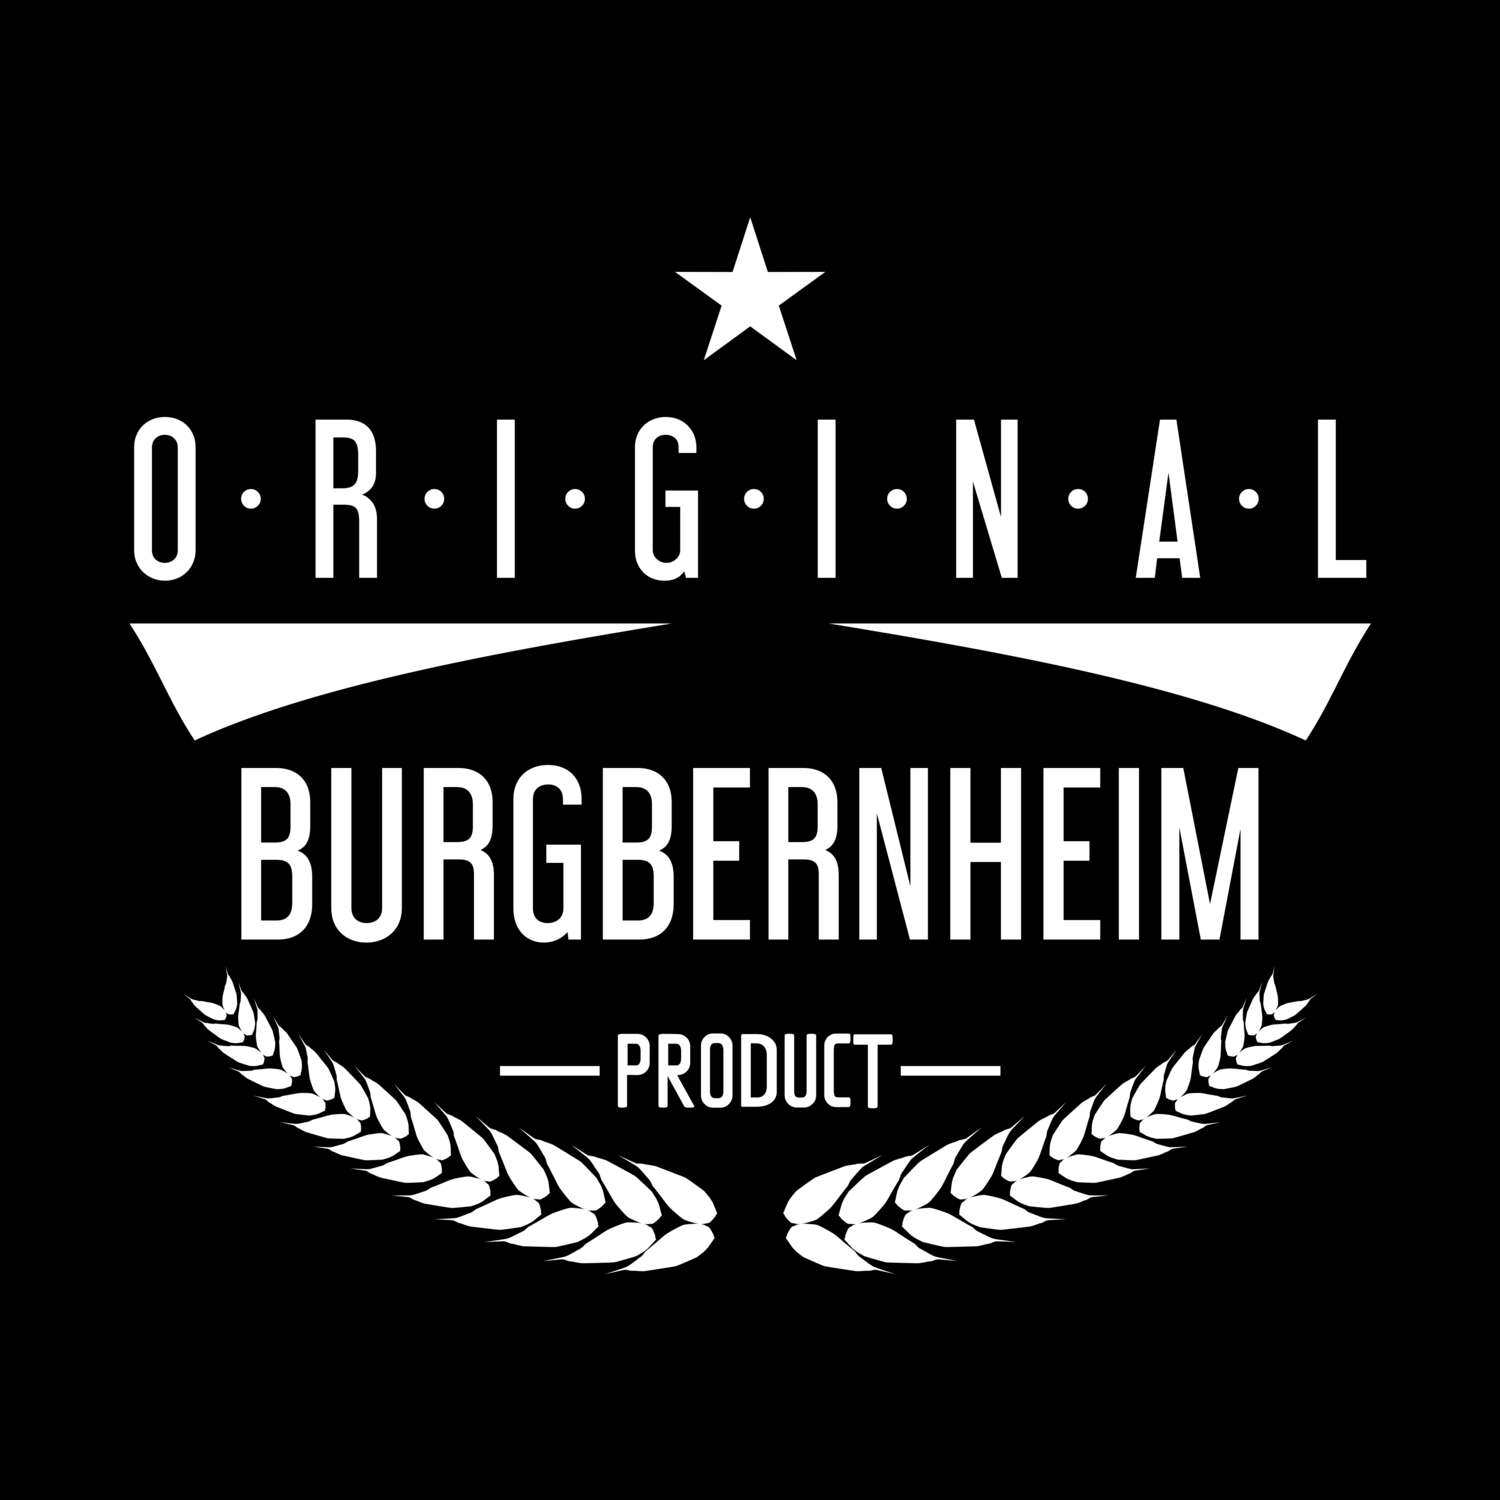 Burgbernheim T-Shirt »Original Product«